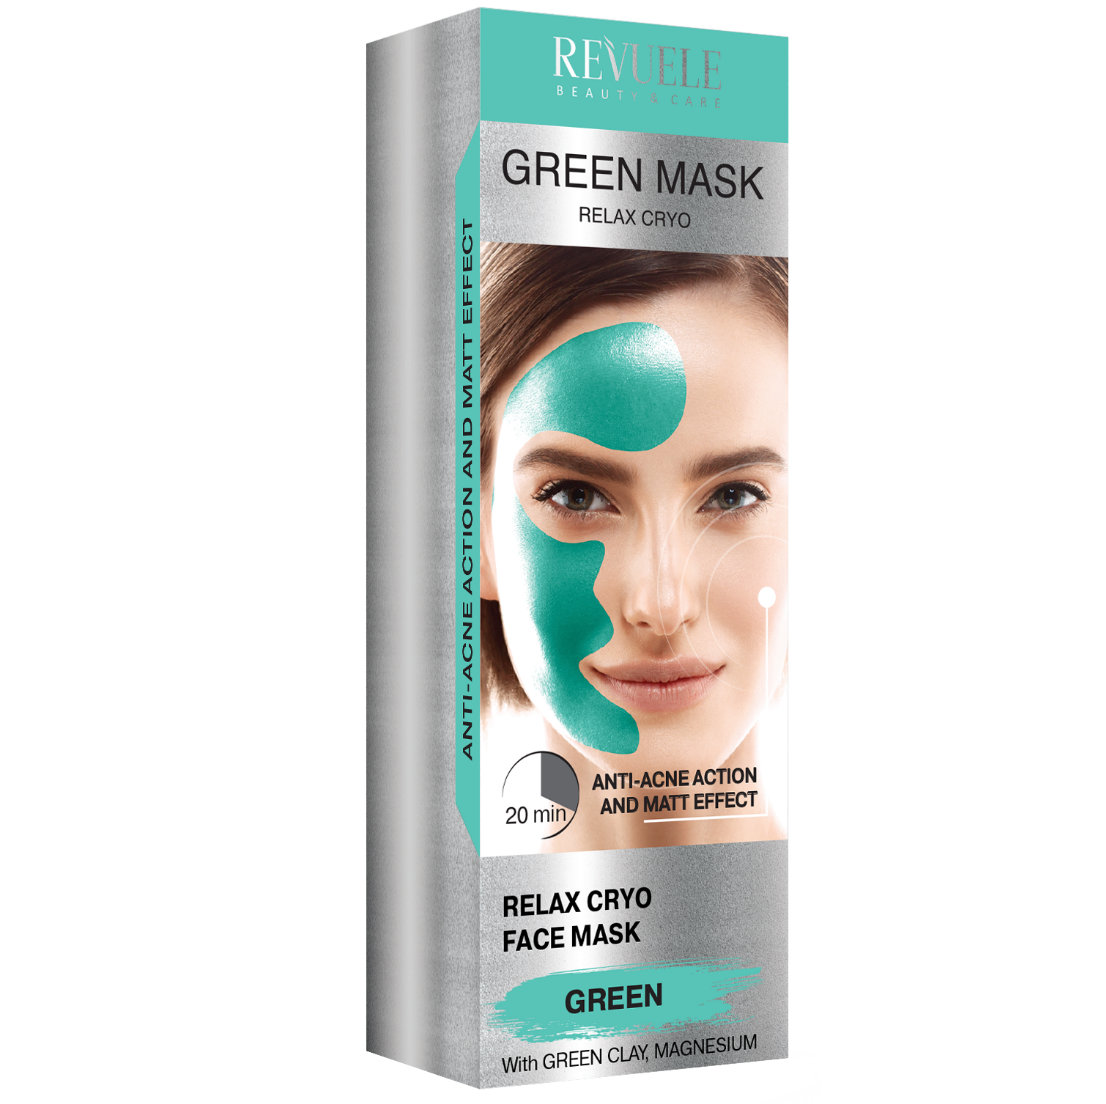 Зеленая маска для лица Revuele Anti-Acne Green Face Mask Cryo Effect, 80 мл - фото 1